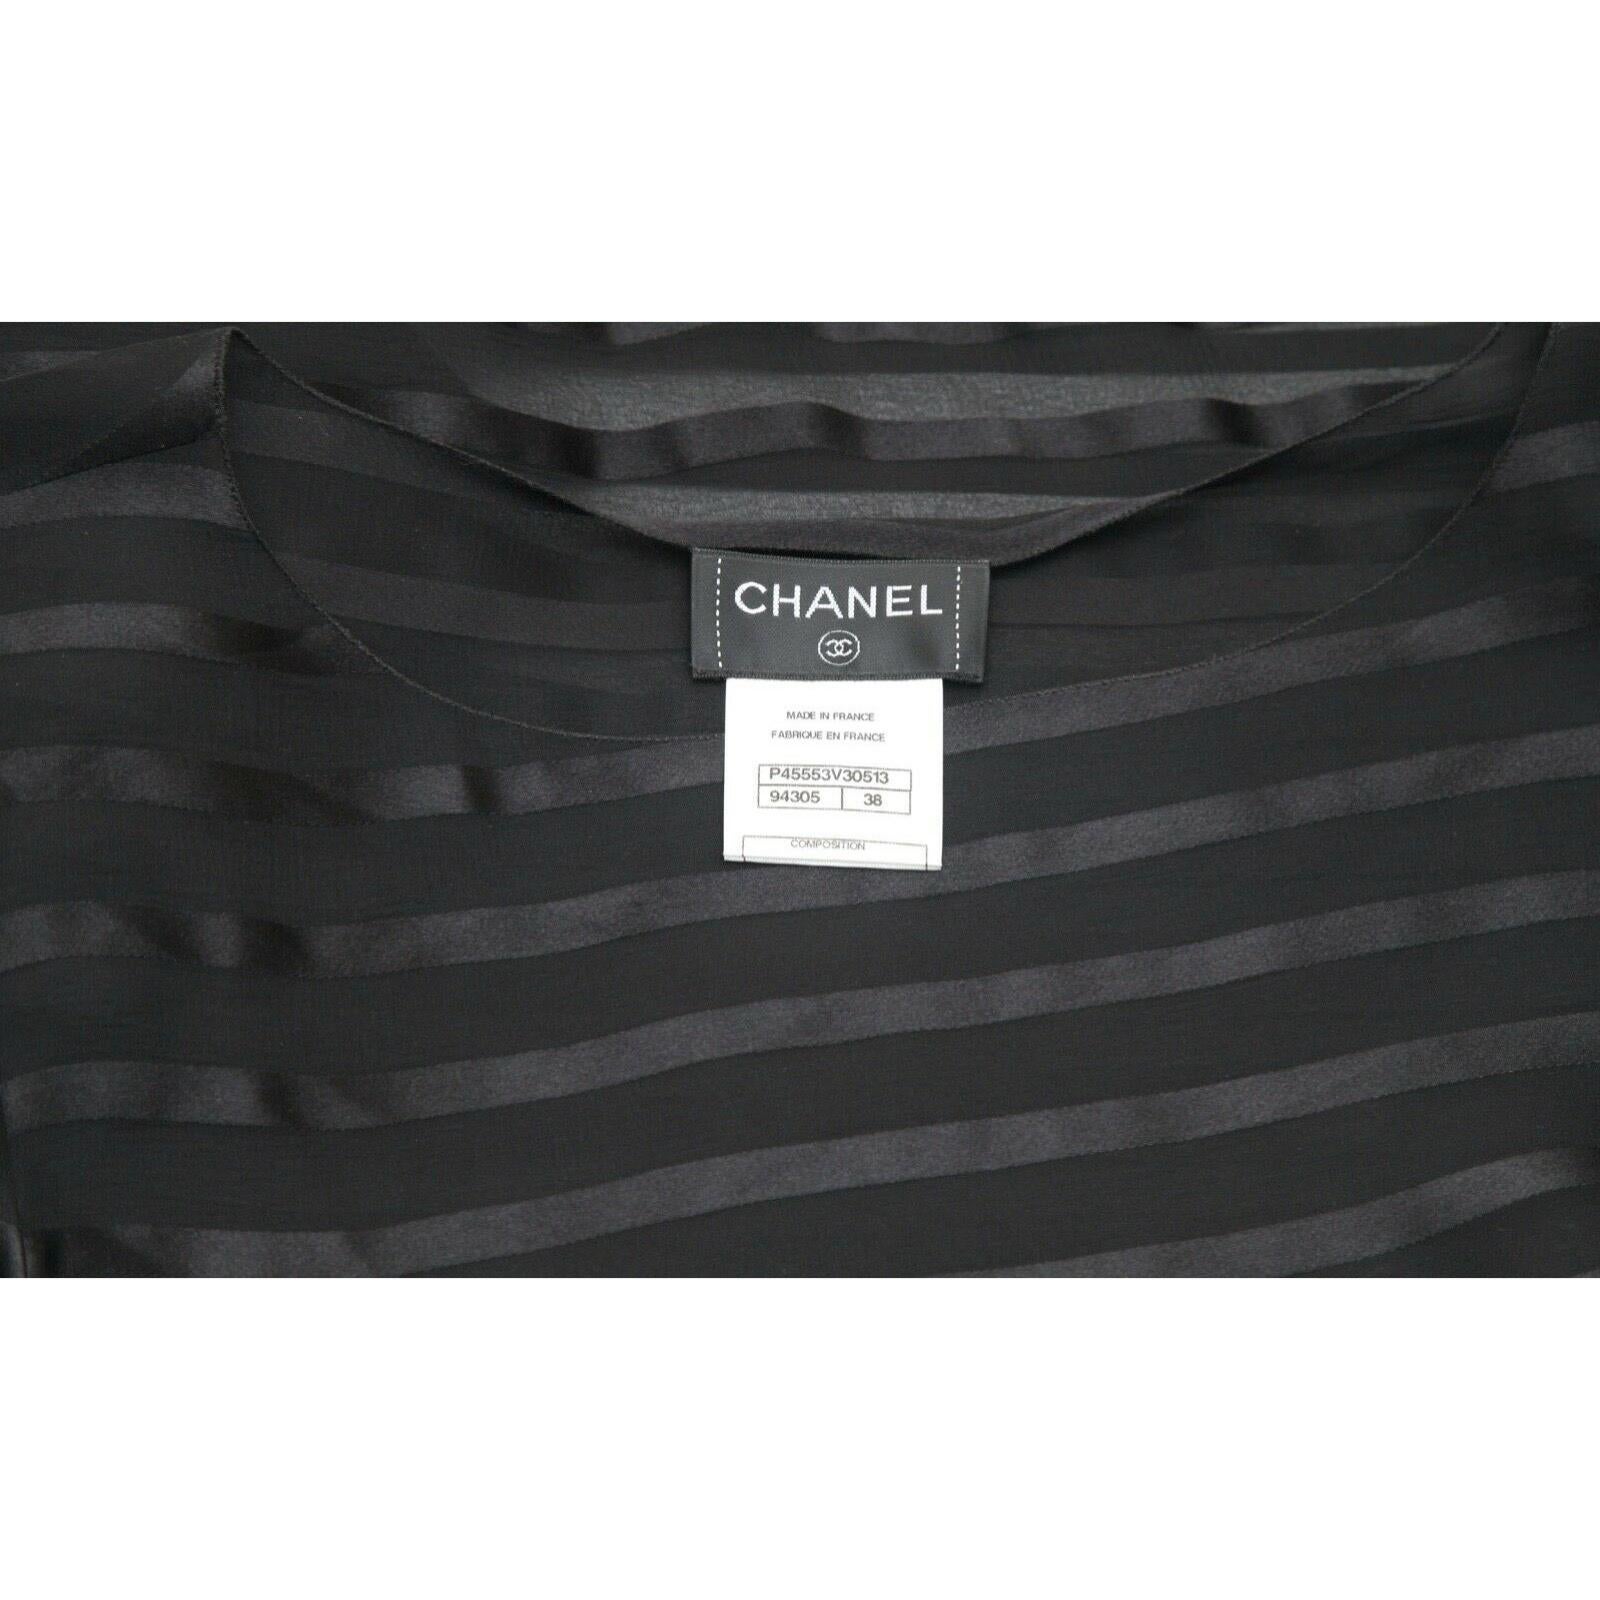 CHANEL Black Silk Blouse Shirt Top Long Sleeve Striped Bateau CC 2013 Sz 38 3